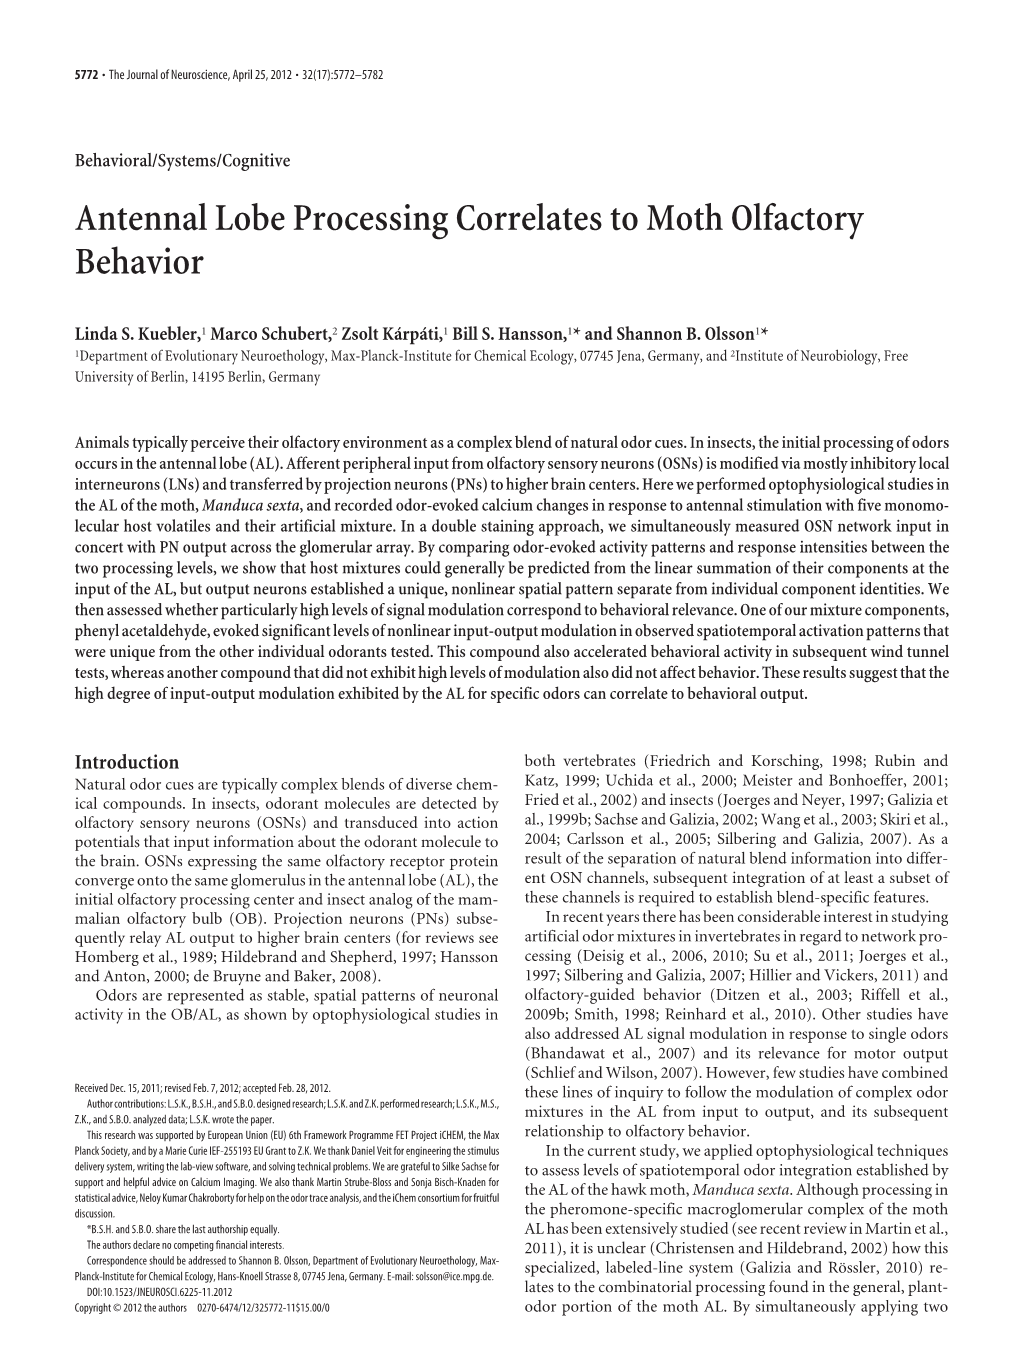 Antennal Lobe Processing Correlates to Moth Olfactory Behavior